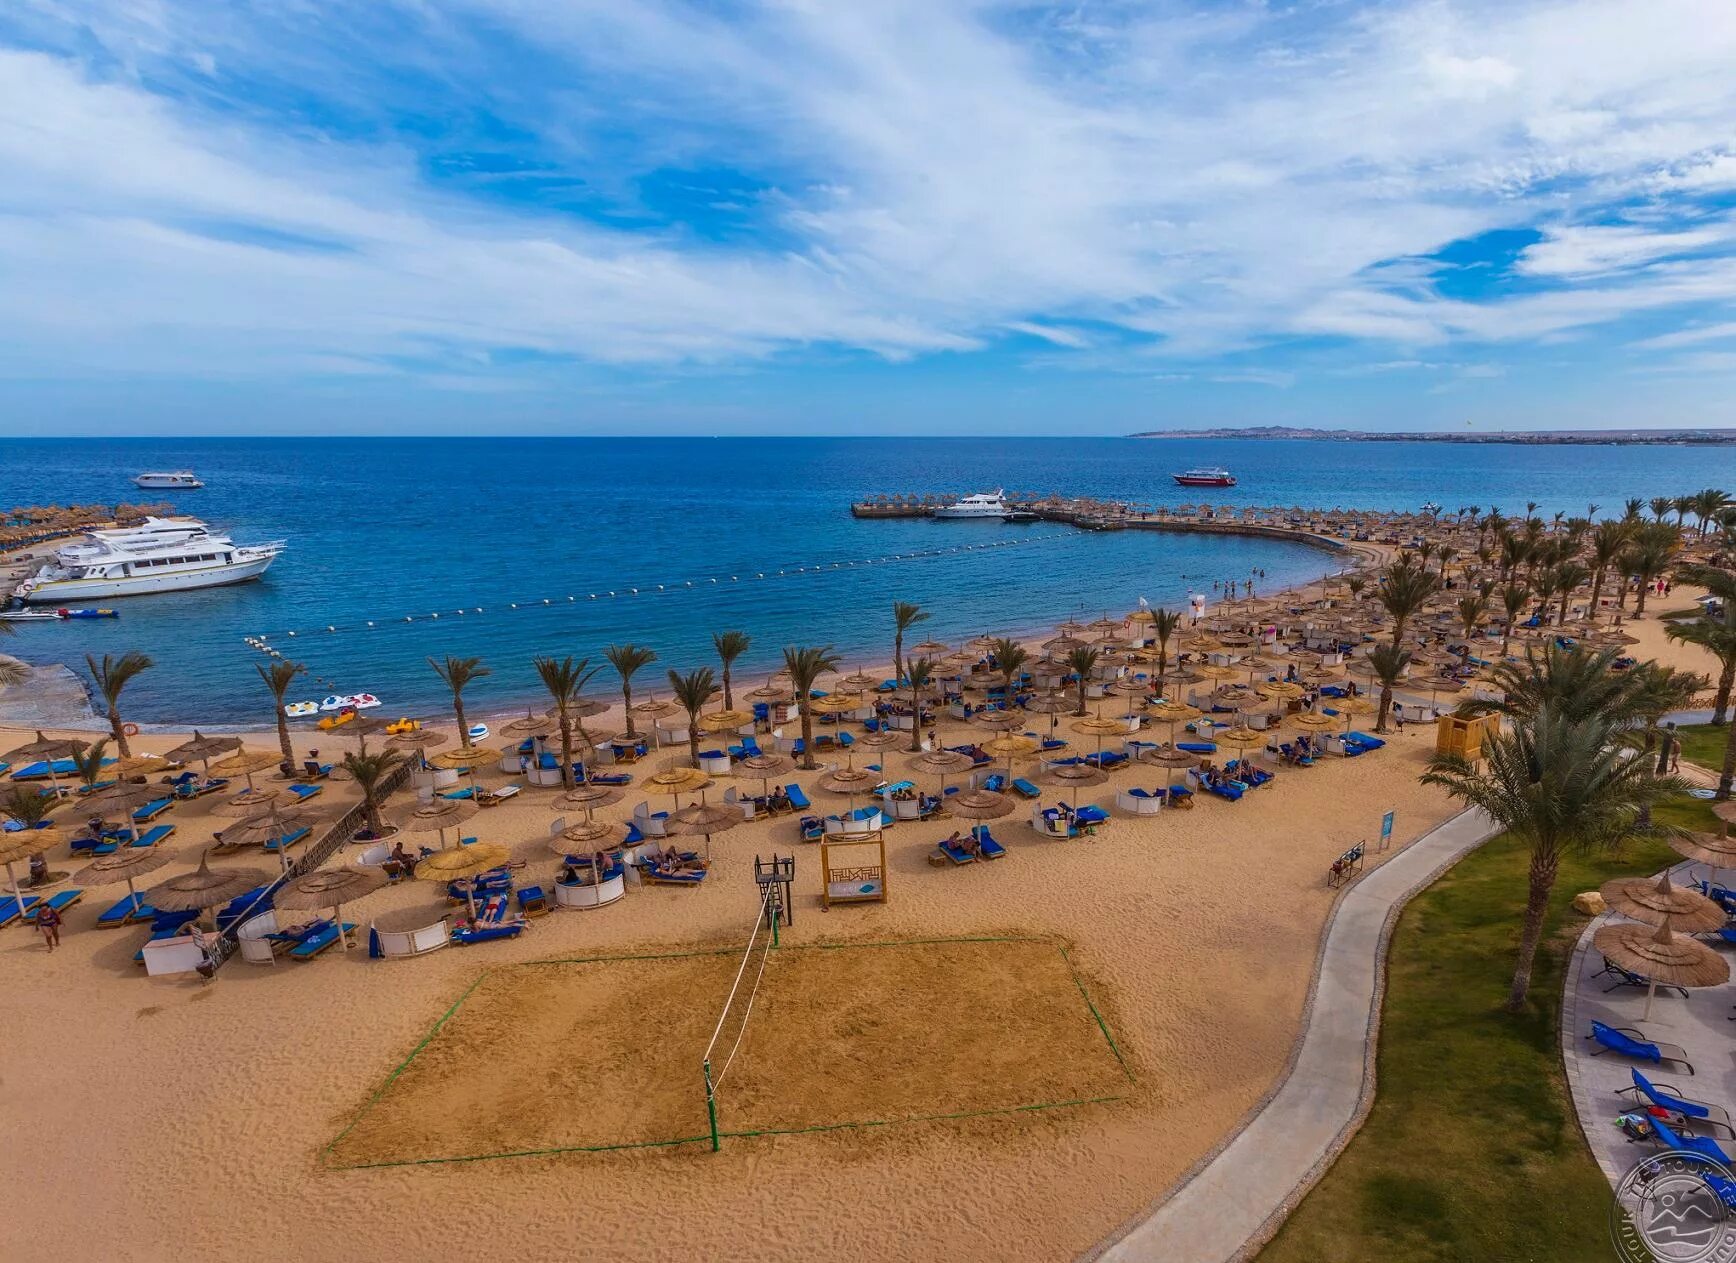 Beach Albatros Resort 4. Отель Beach Albatros Resort Hurghada. Альбатрос Бич Хургада 4. Beach Albatros Resort Hurghada 4 пляж.